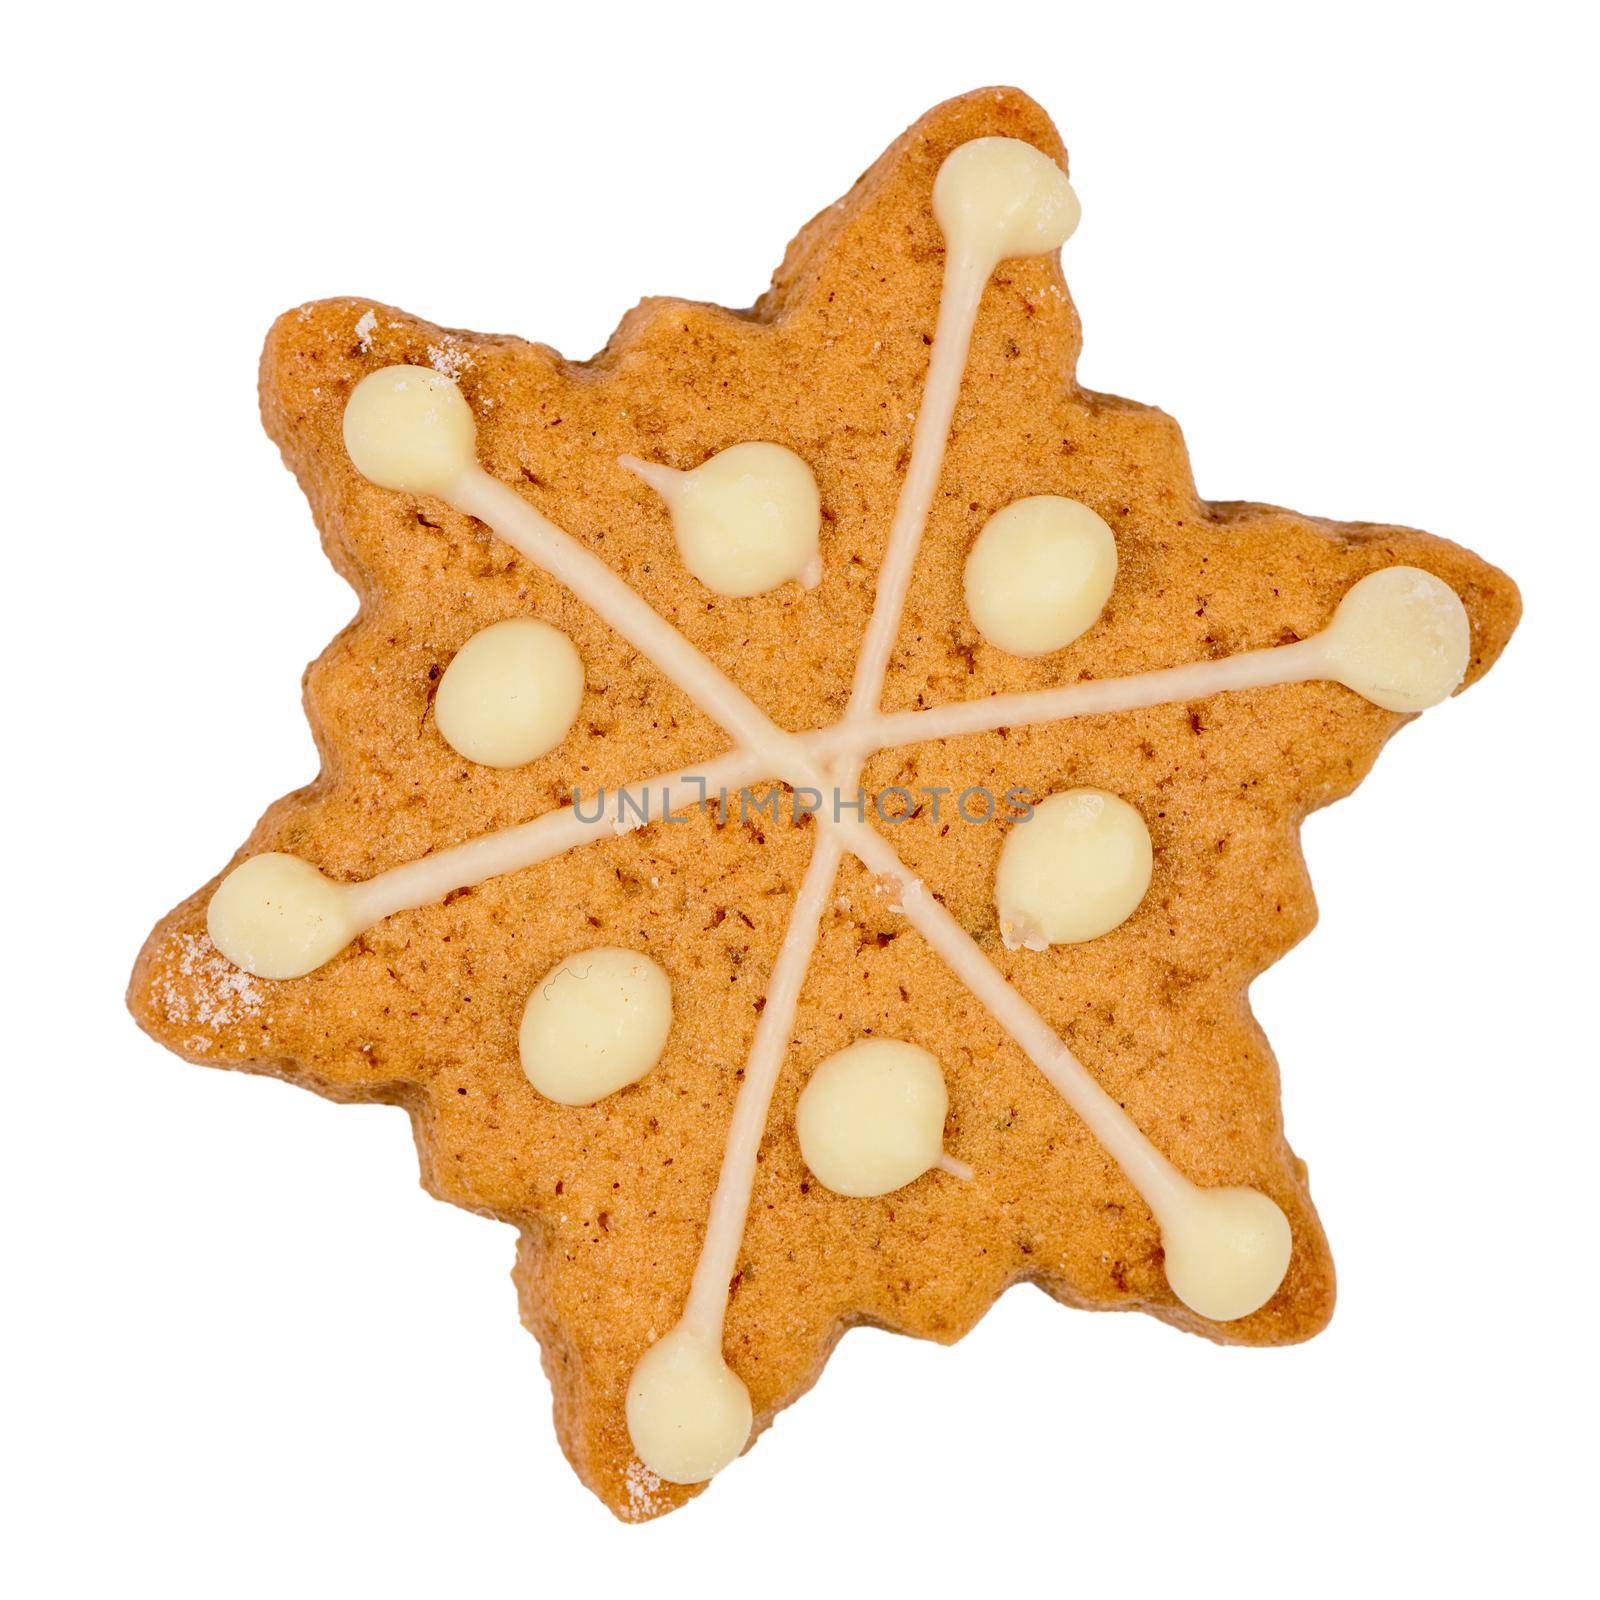 Tasty homemade Christmas cookie  by homydesign